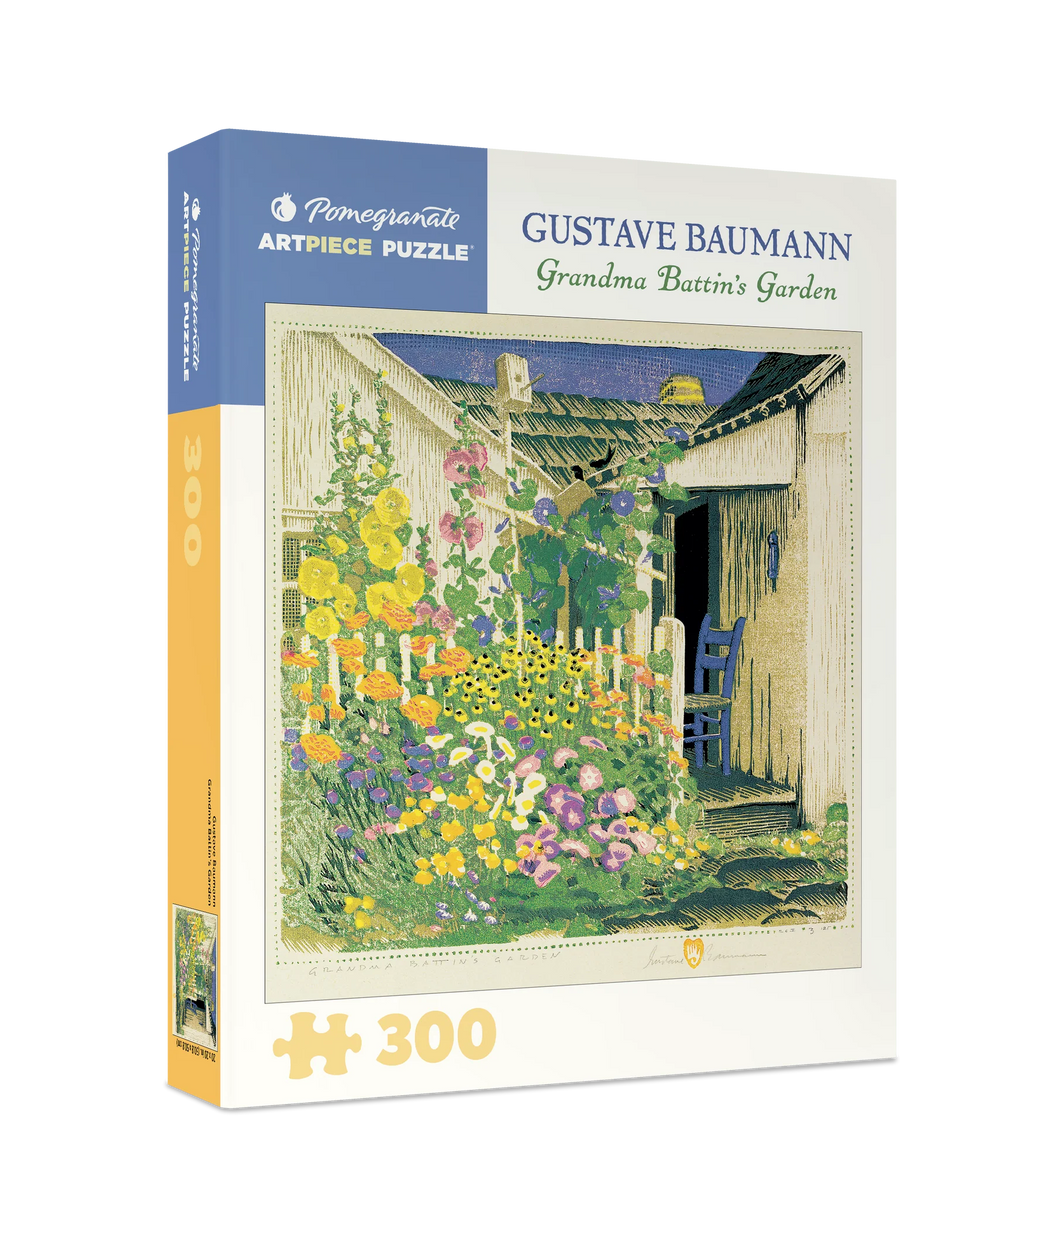 gustave baumann - grandma battin's garden  puzzle - 300pc